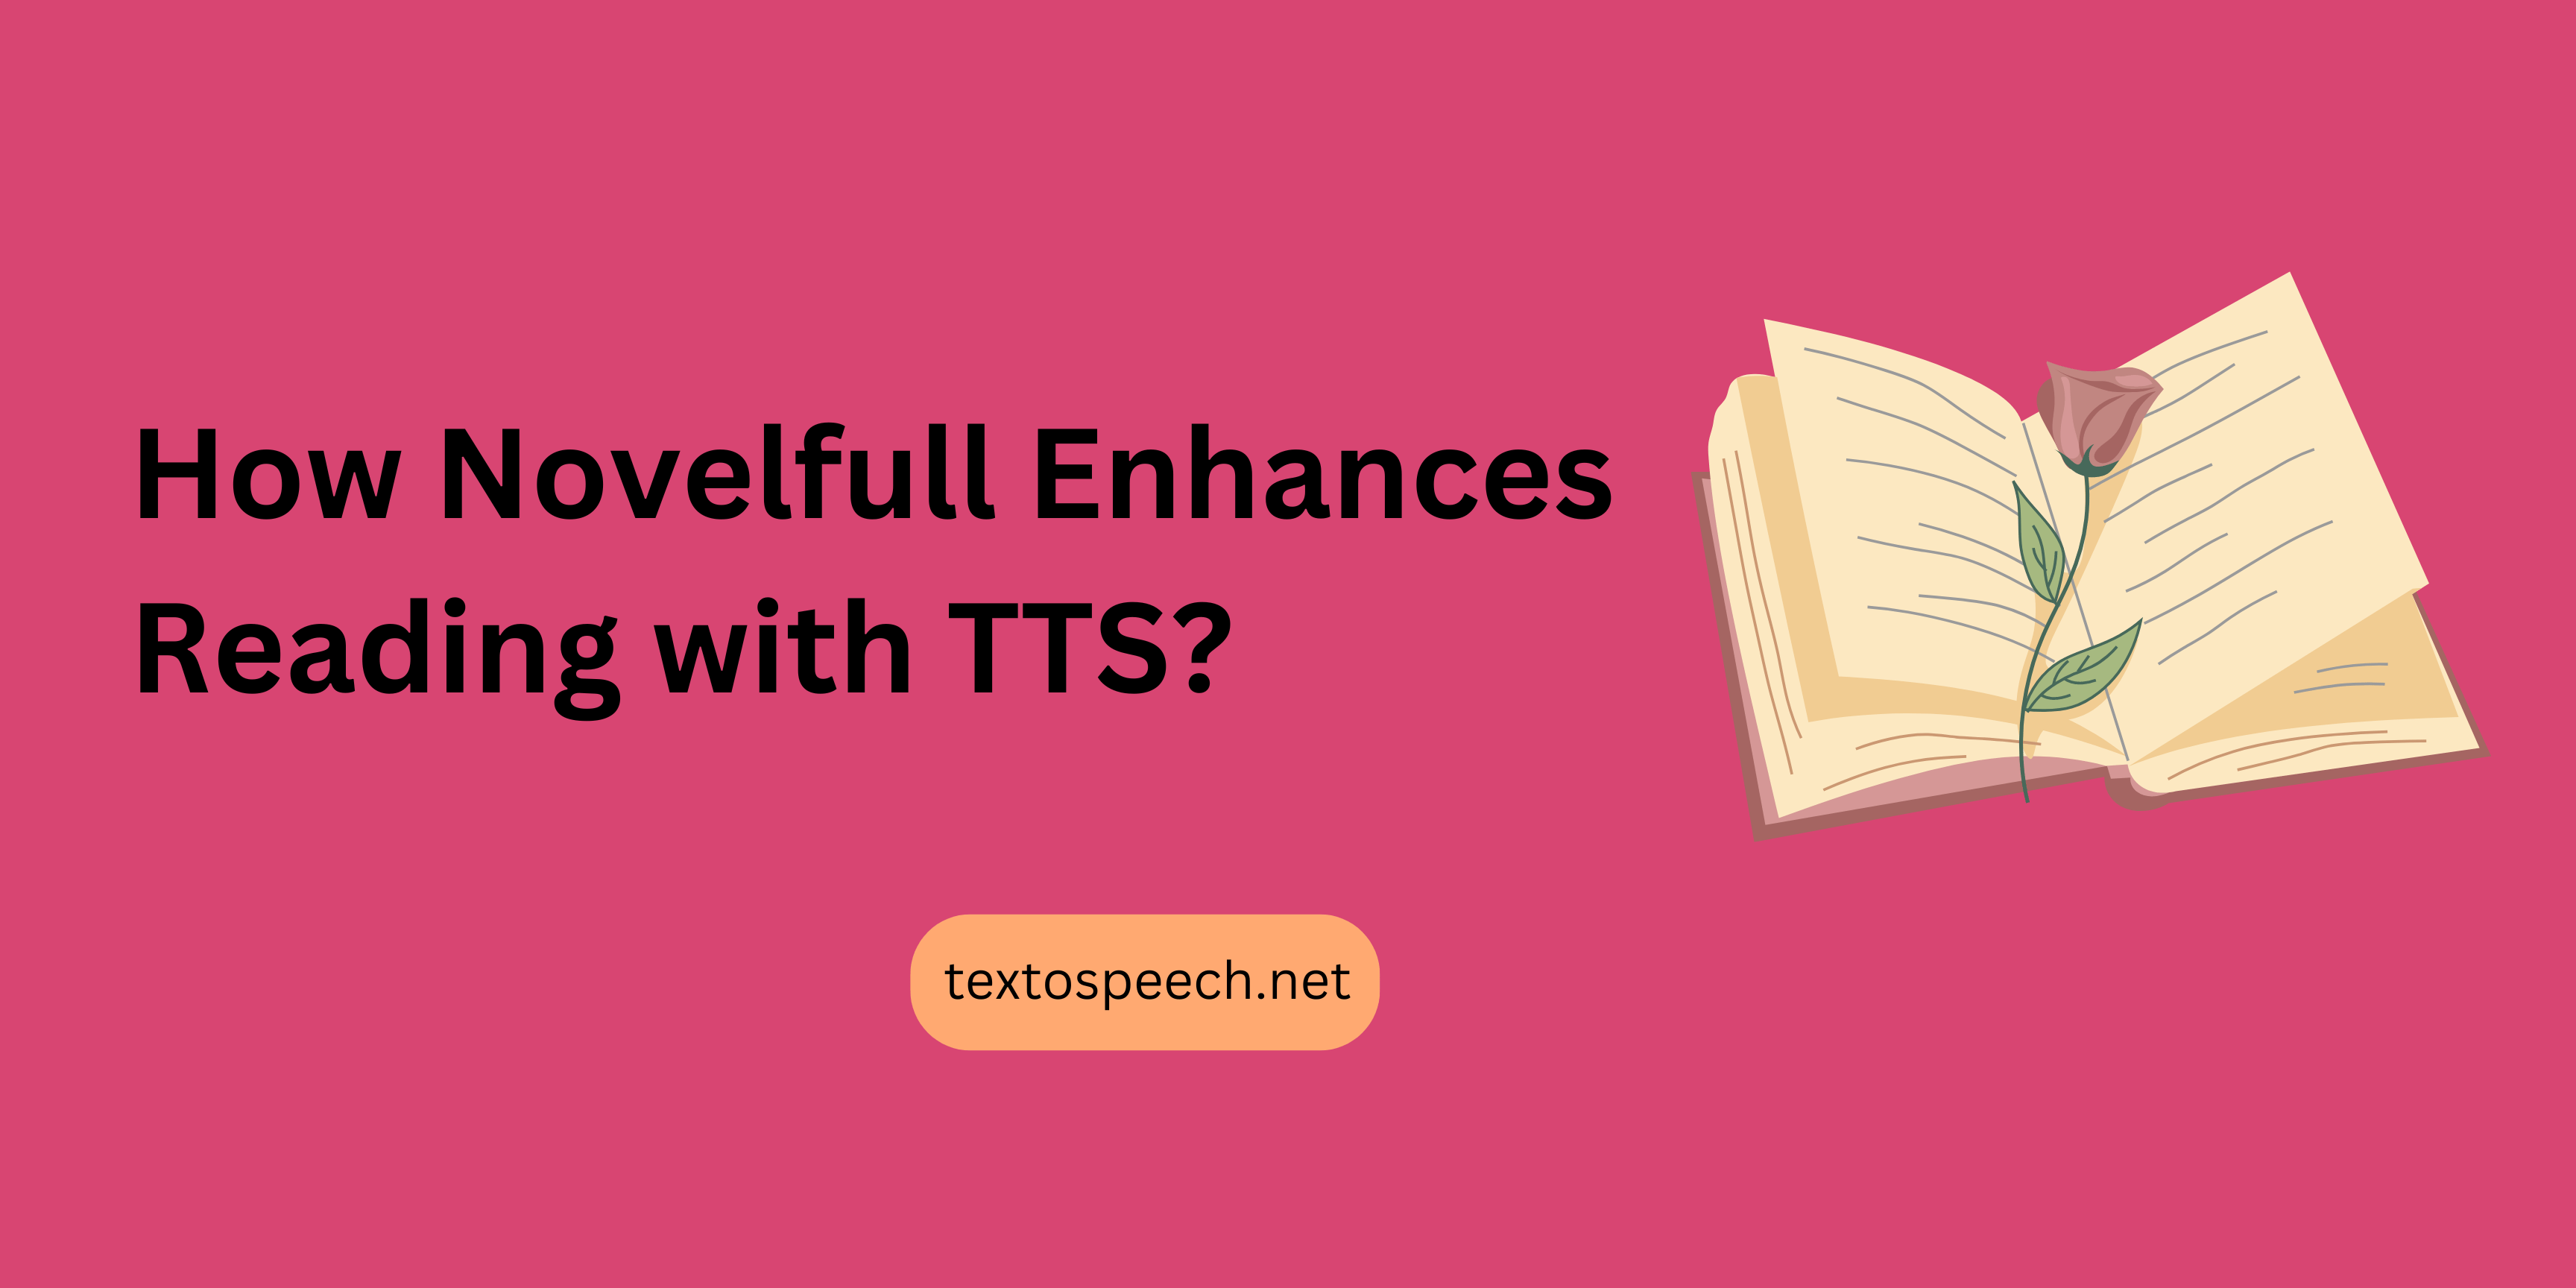 How Novelfull Enhances Reading with TTS?